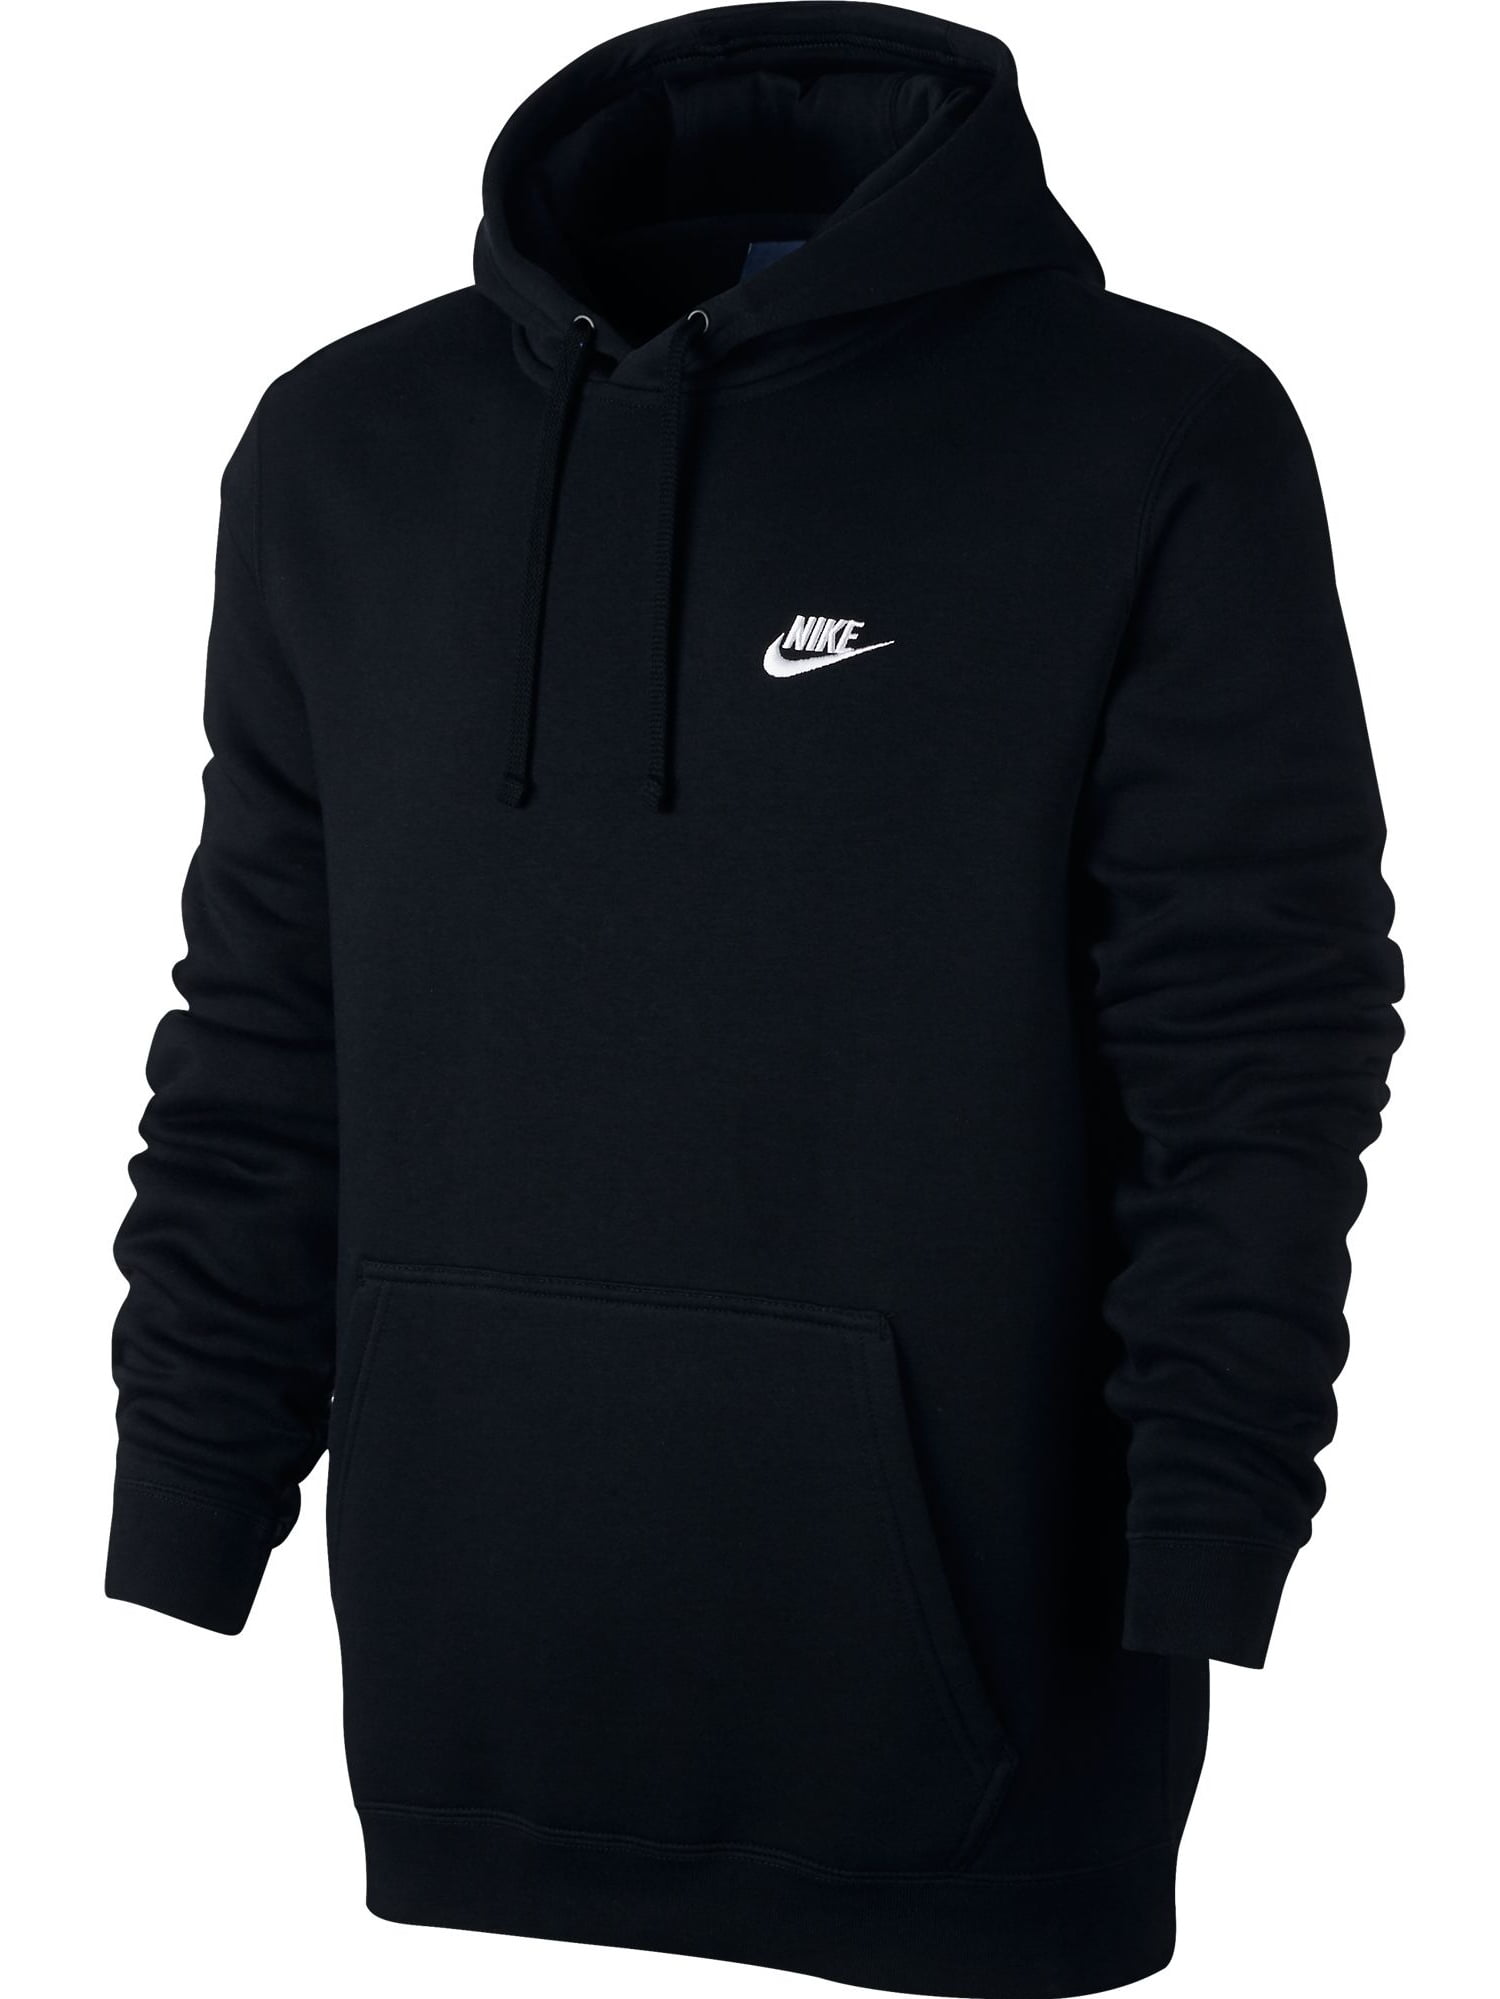 black nike hoodie with white tick